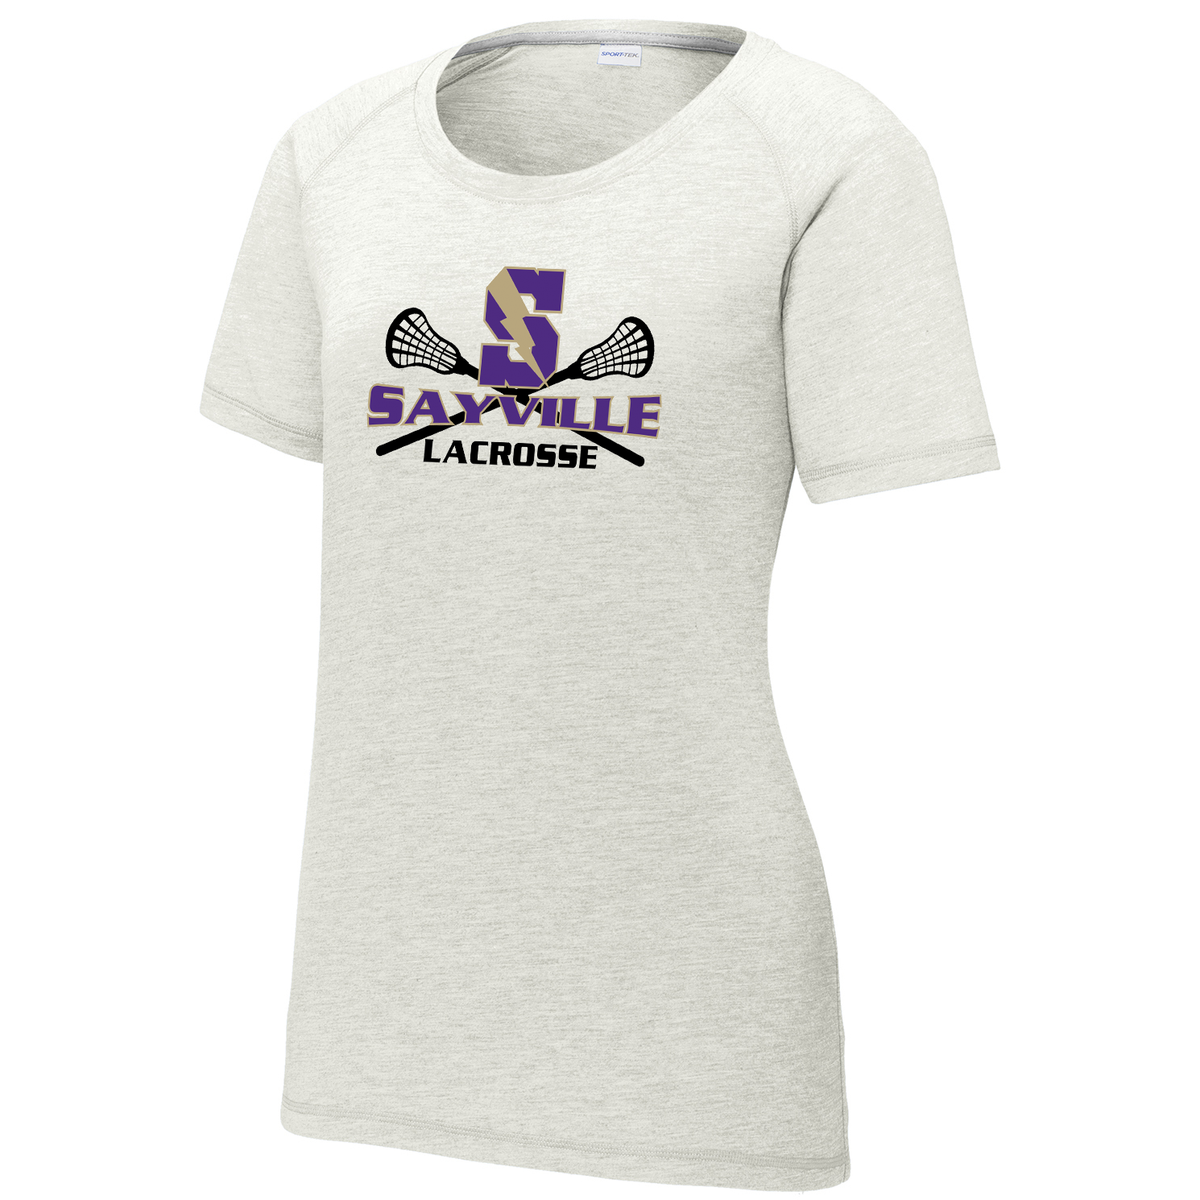 Sayville Lacrosse Women's Raglan CottonTouch